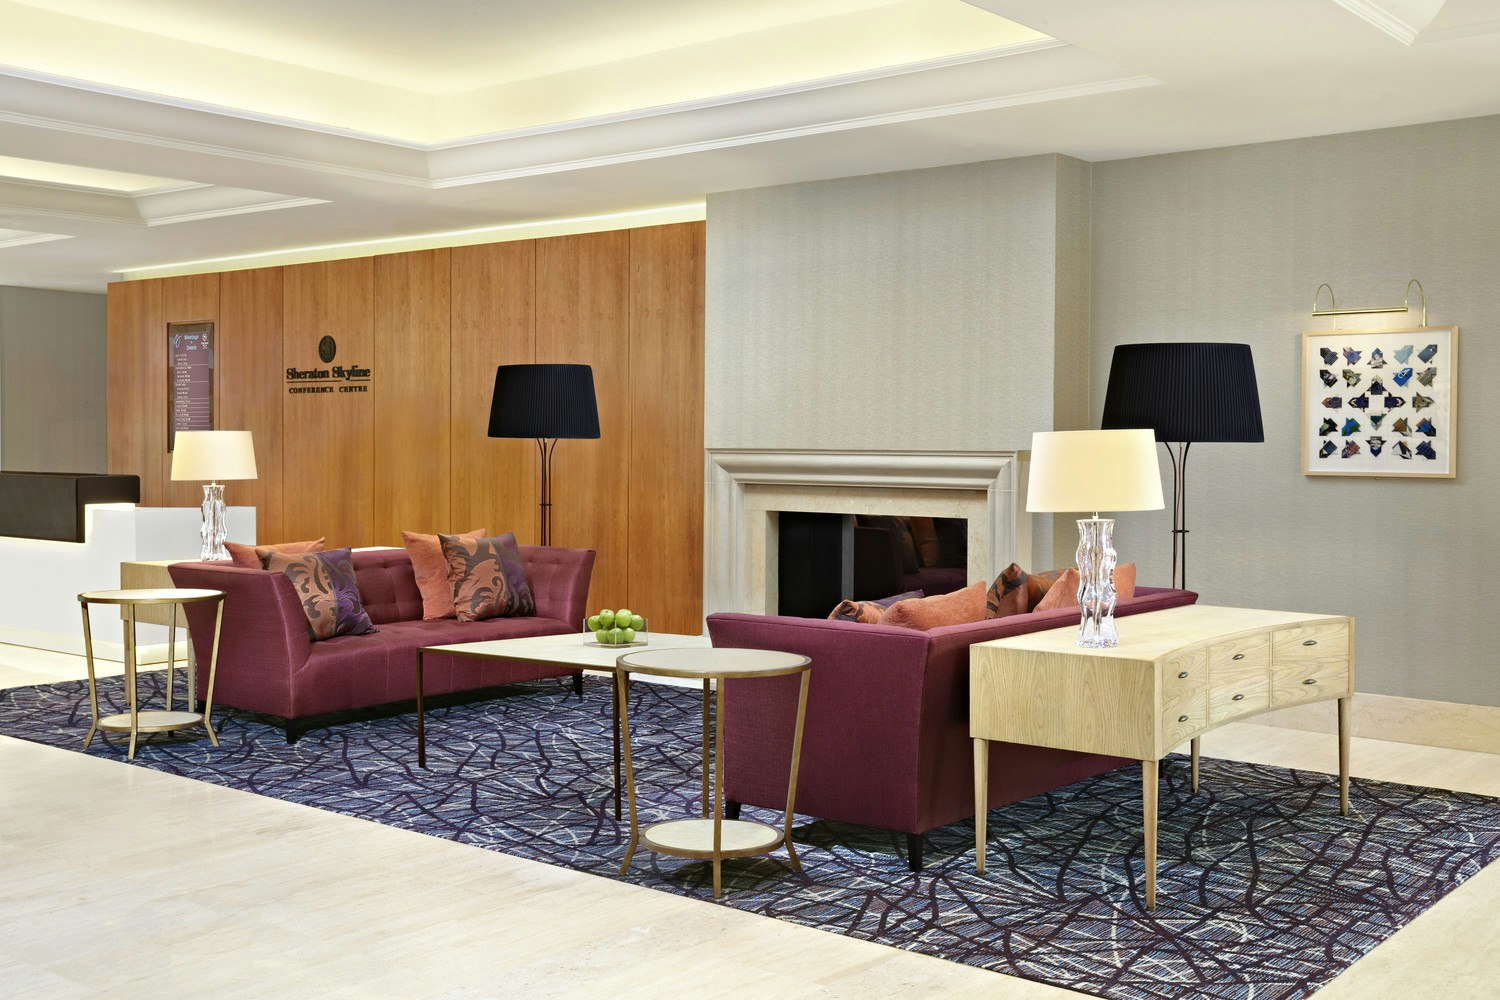 Sheraton Skyline Hotel London Heathrow - International Suite image 4